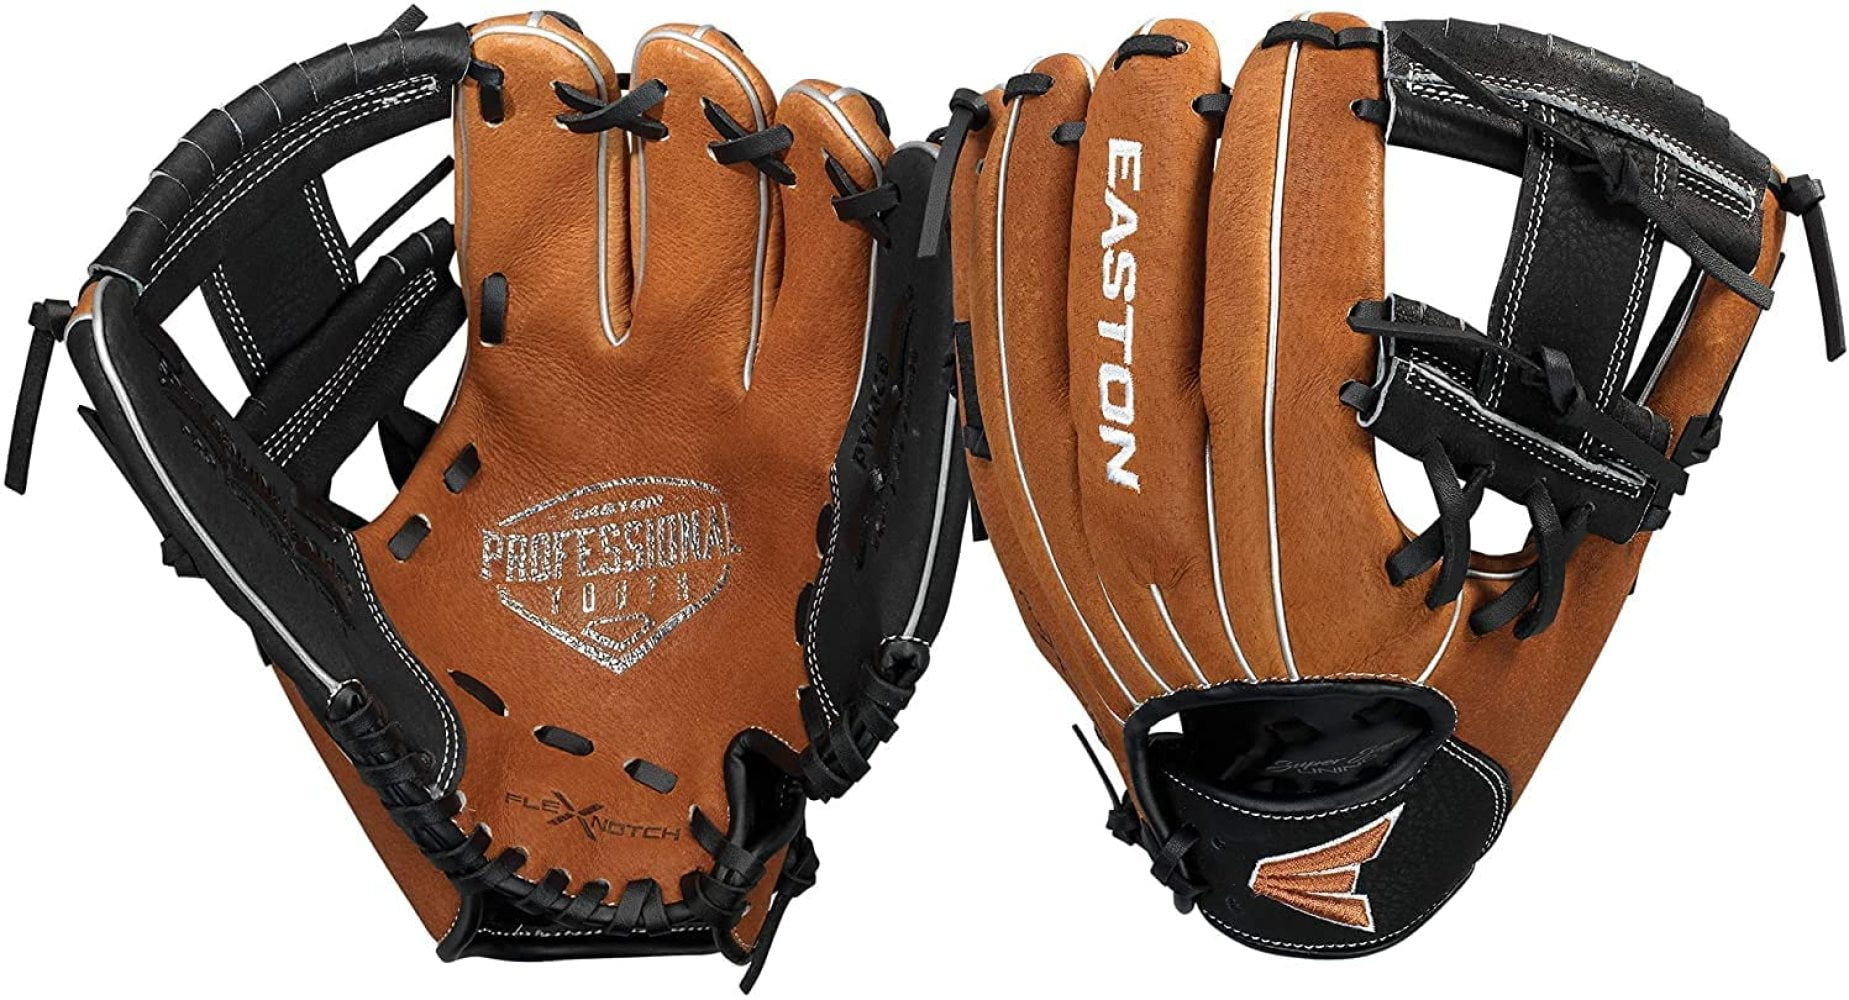 Easton 10 Inch Leather Youth Baseball Glove Black Magic RHT BRAND NEW SEE PICS 